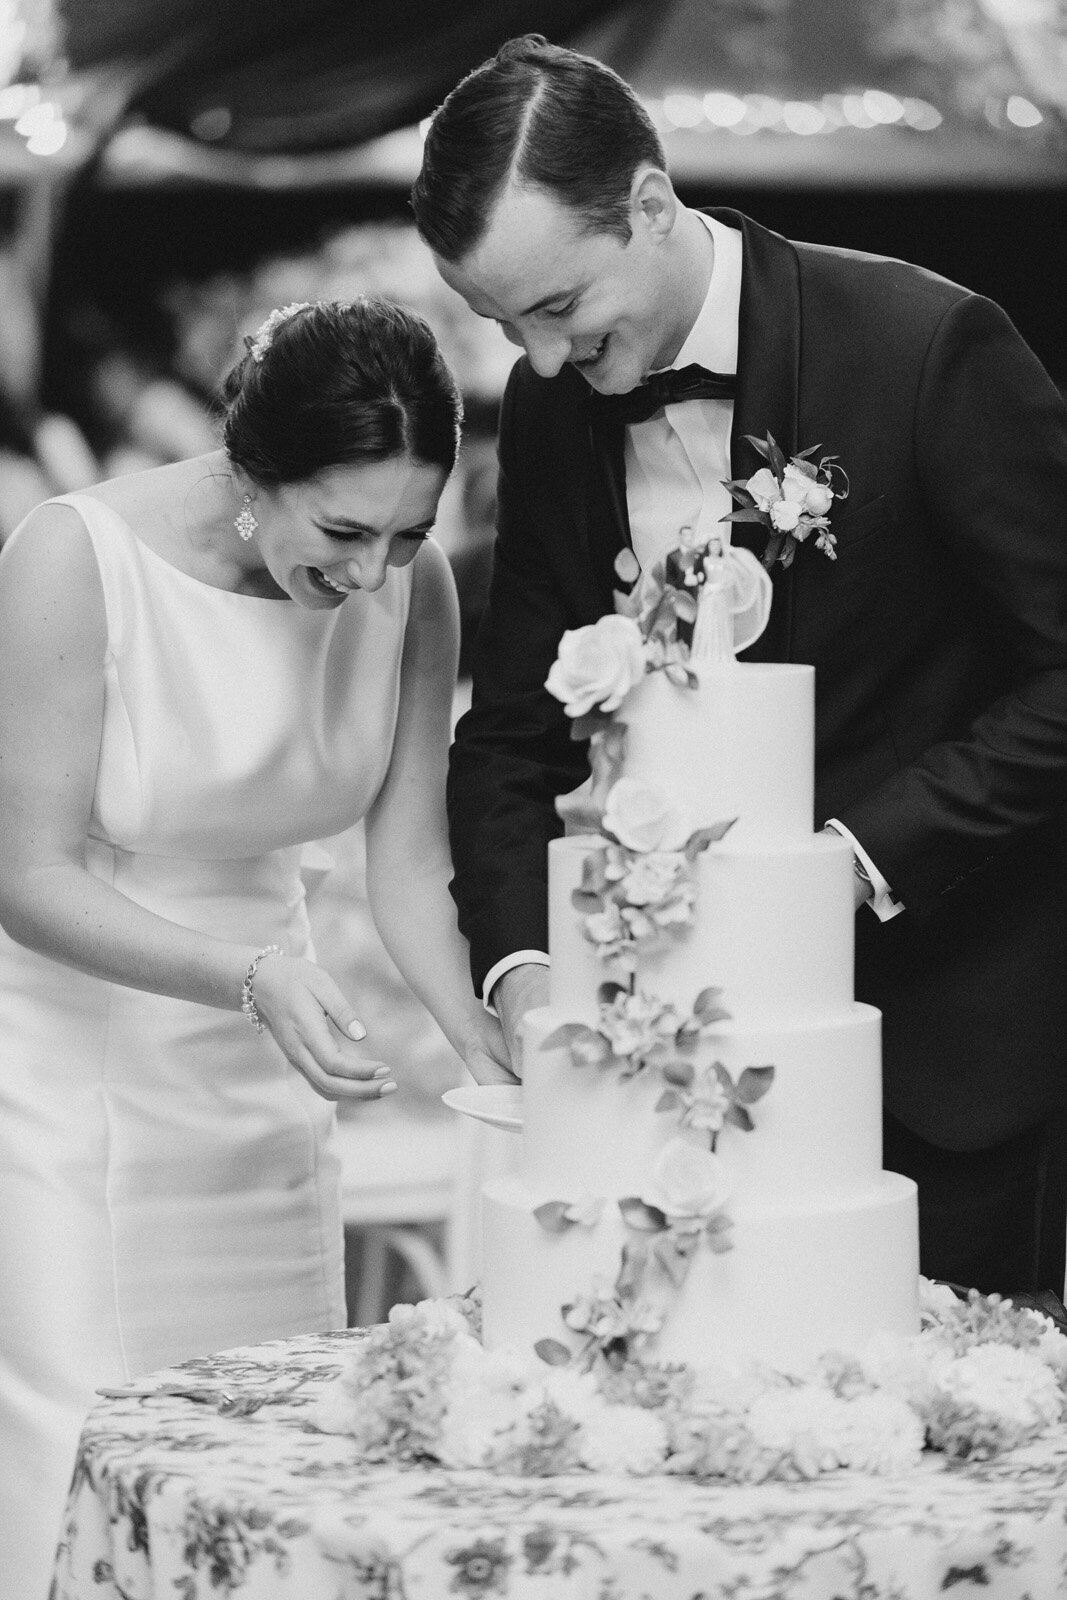 Kate-Murtaugh-Events-Castle-Hill-Inn-wedding-cake-bride-groom